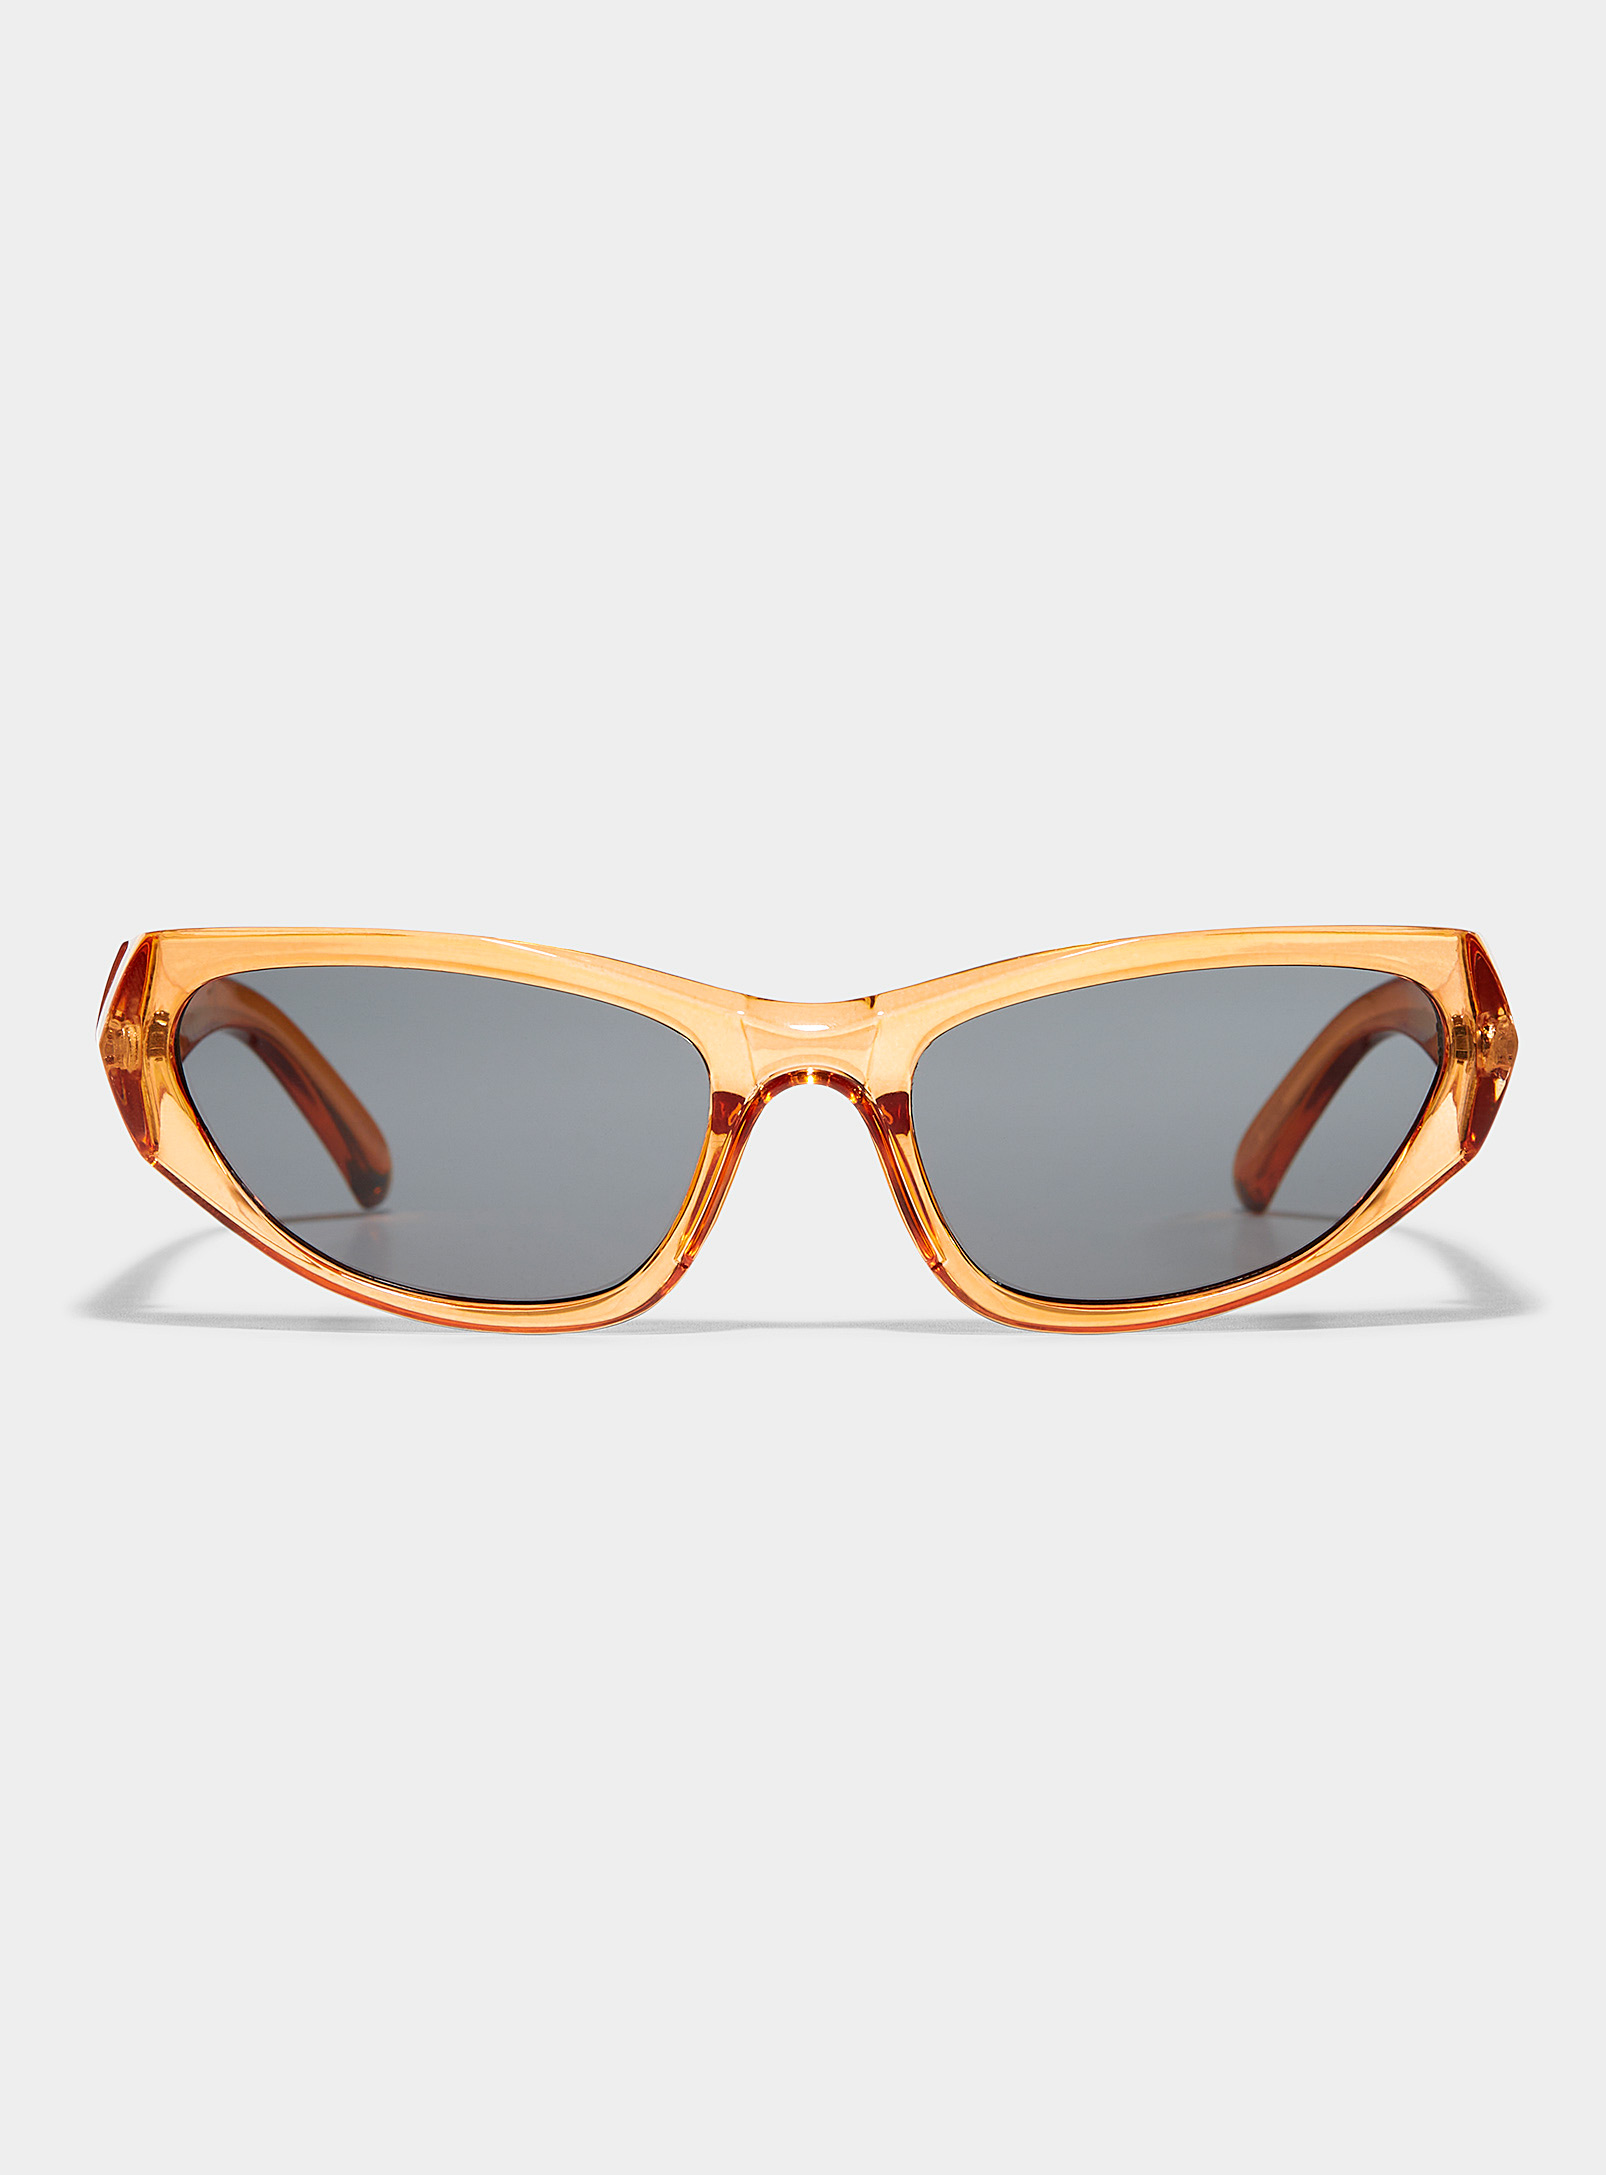 Le 31 Wallen Translucent Oval Sunglasses In Orange